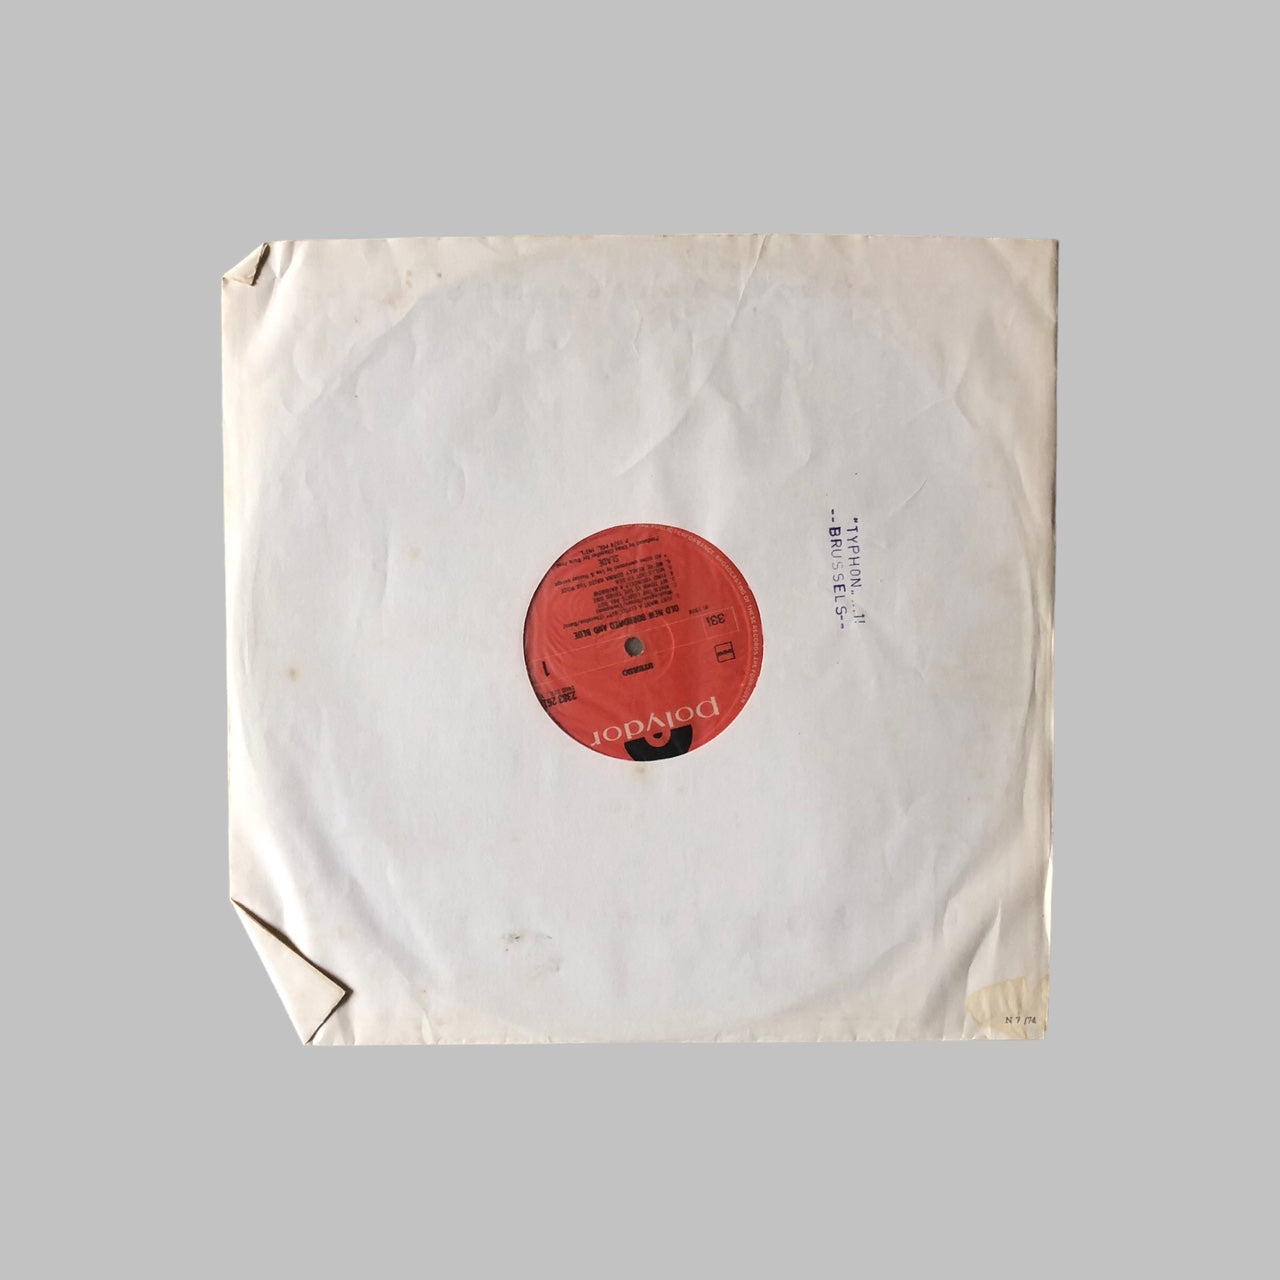 LP Vinyl - Slade - Old New Borrowed and Blue